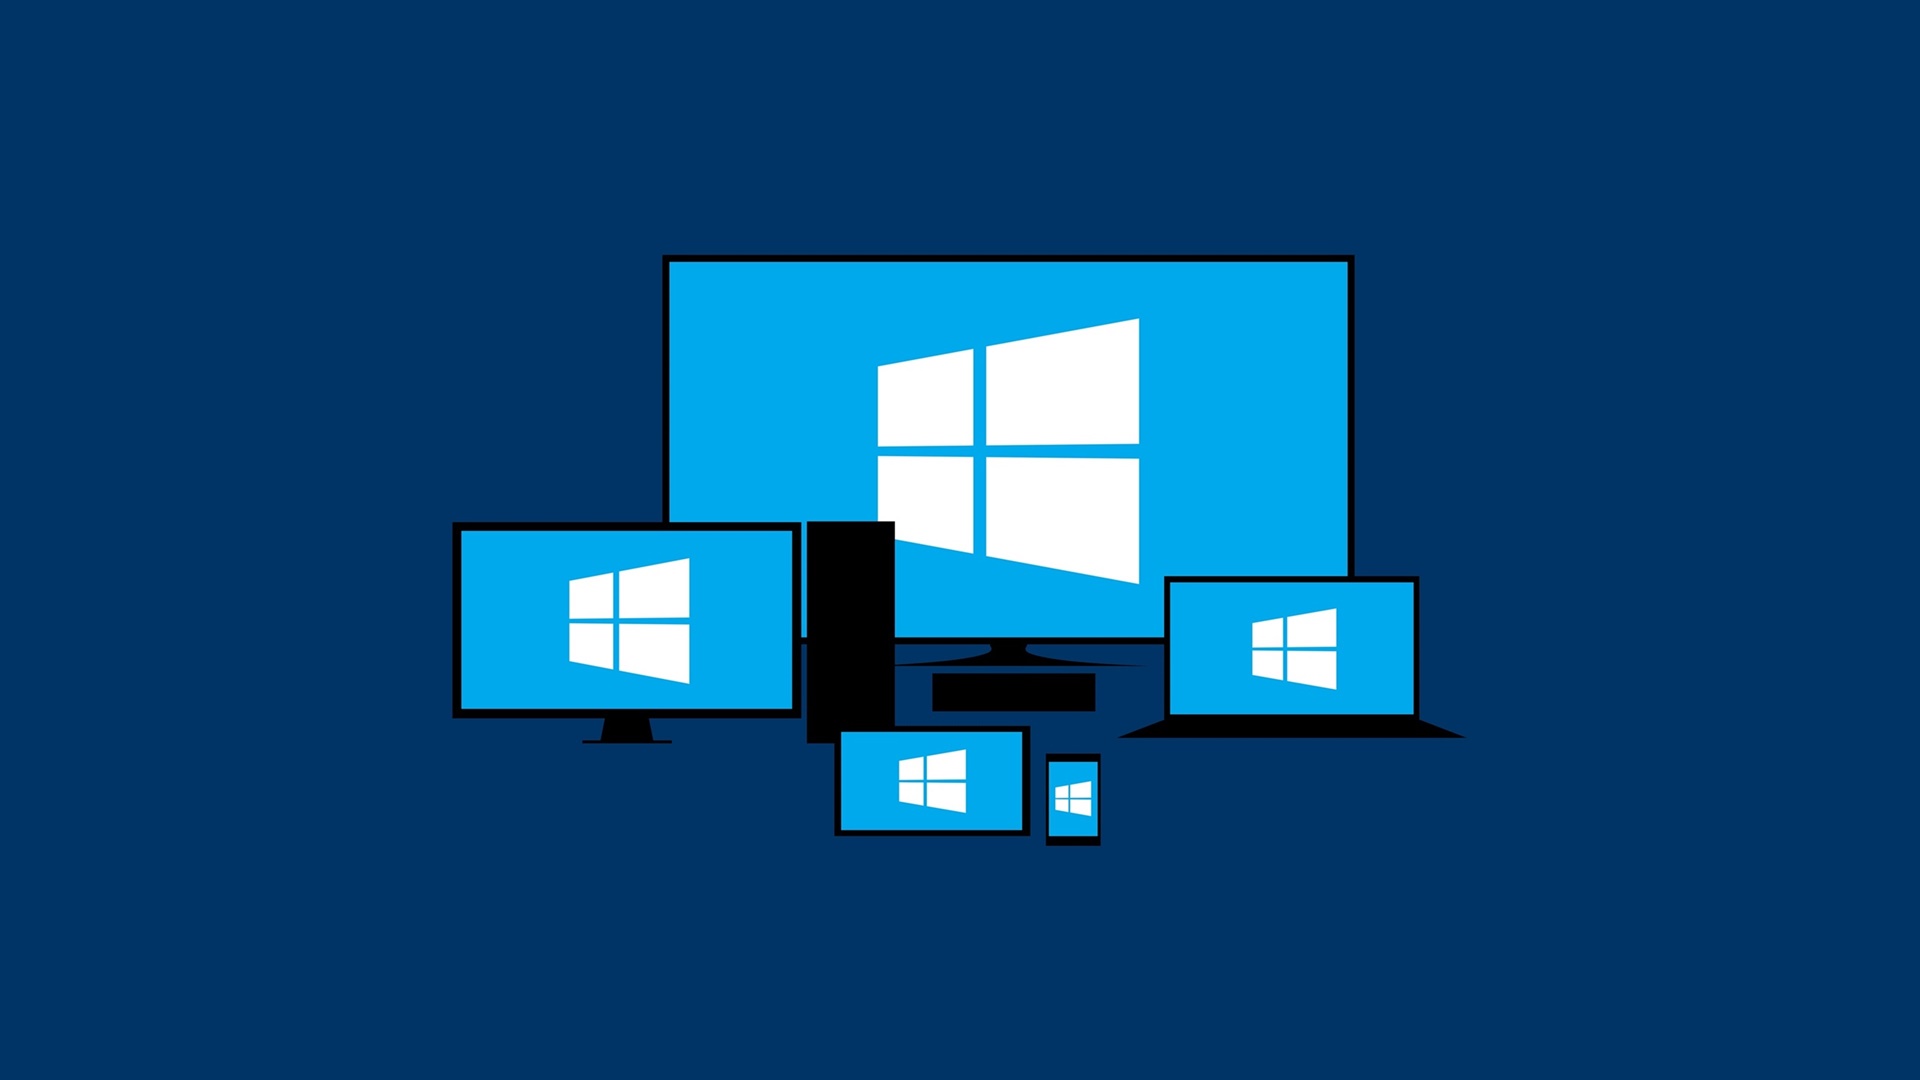 Windows Logo Wallpaper New Logos